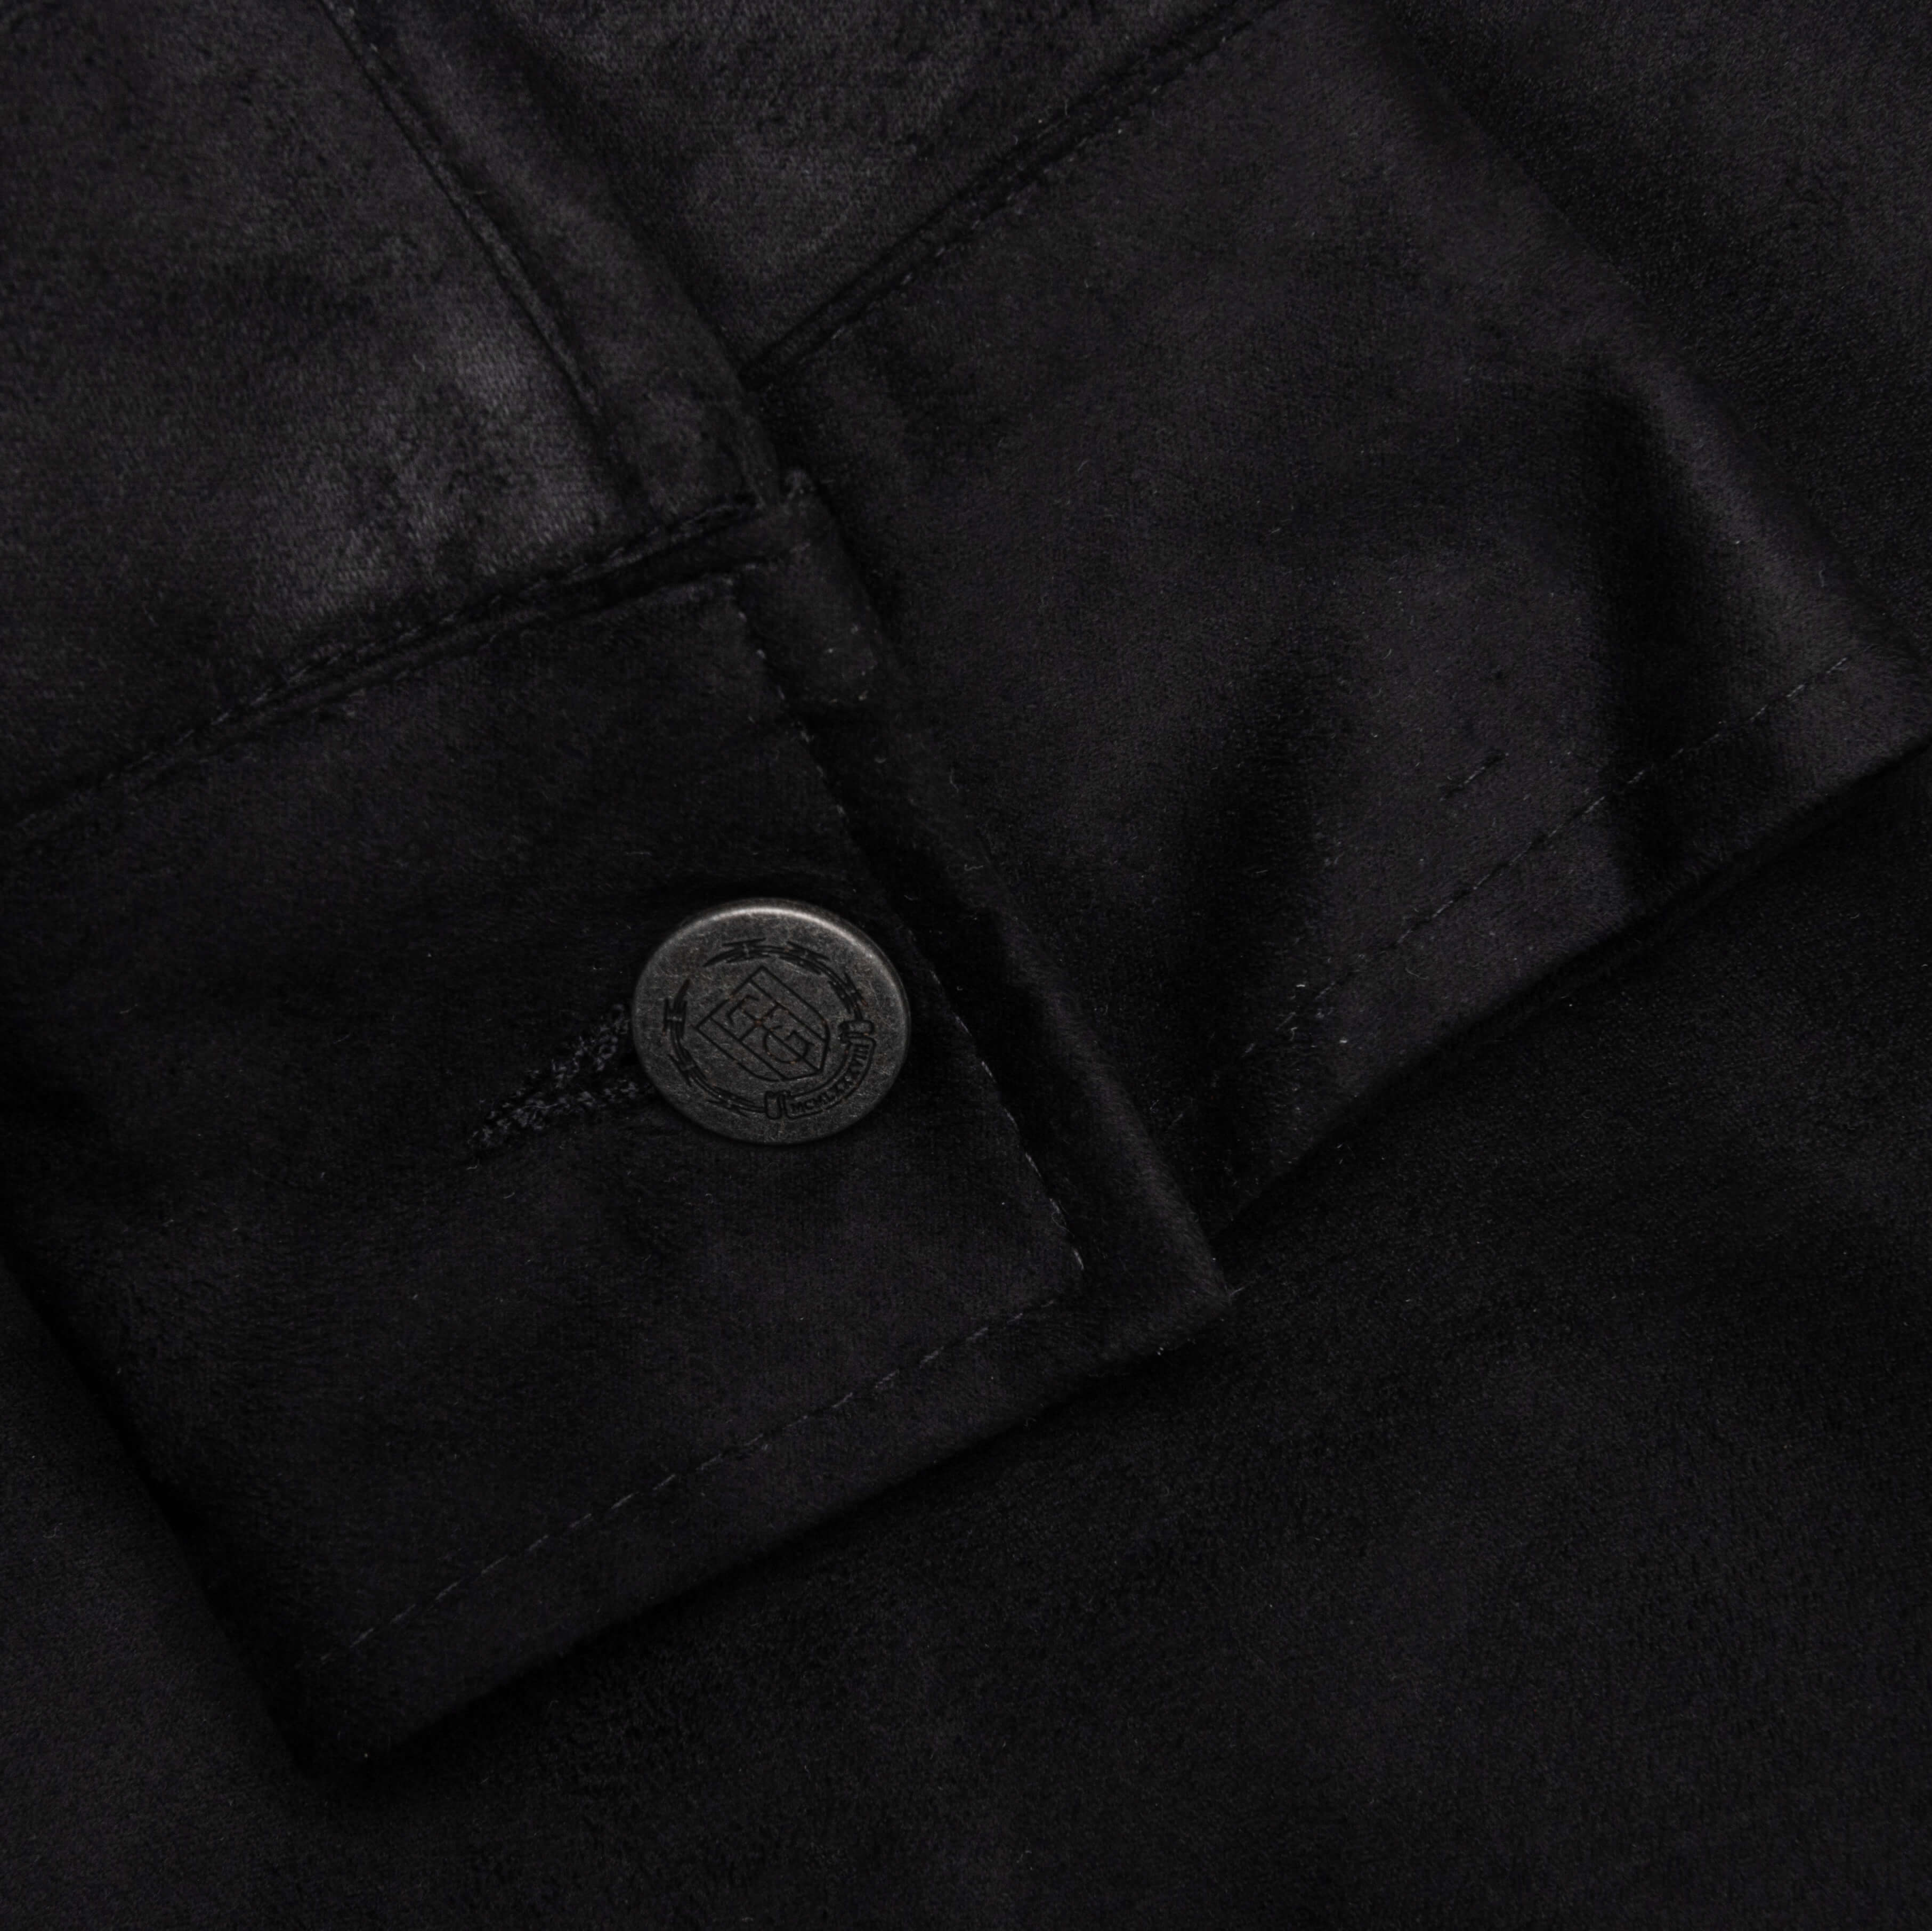 Sueded Band Jacket - Black, , large image number null